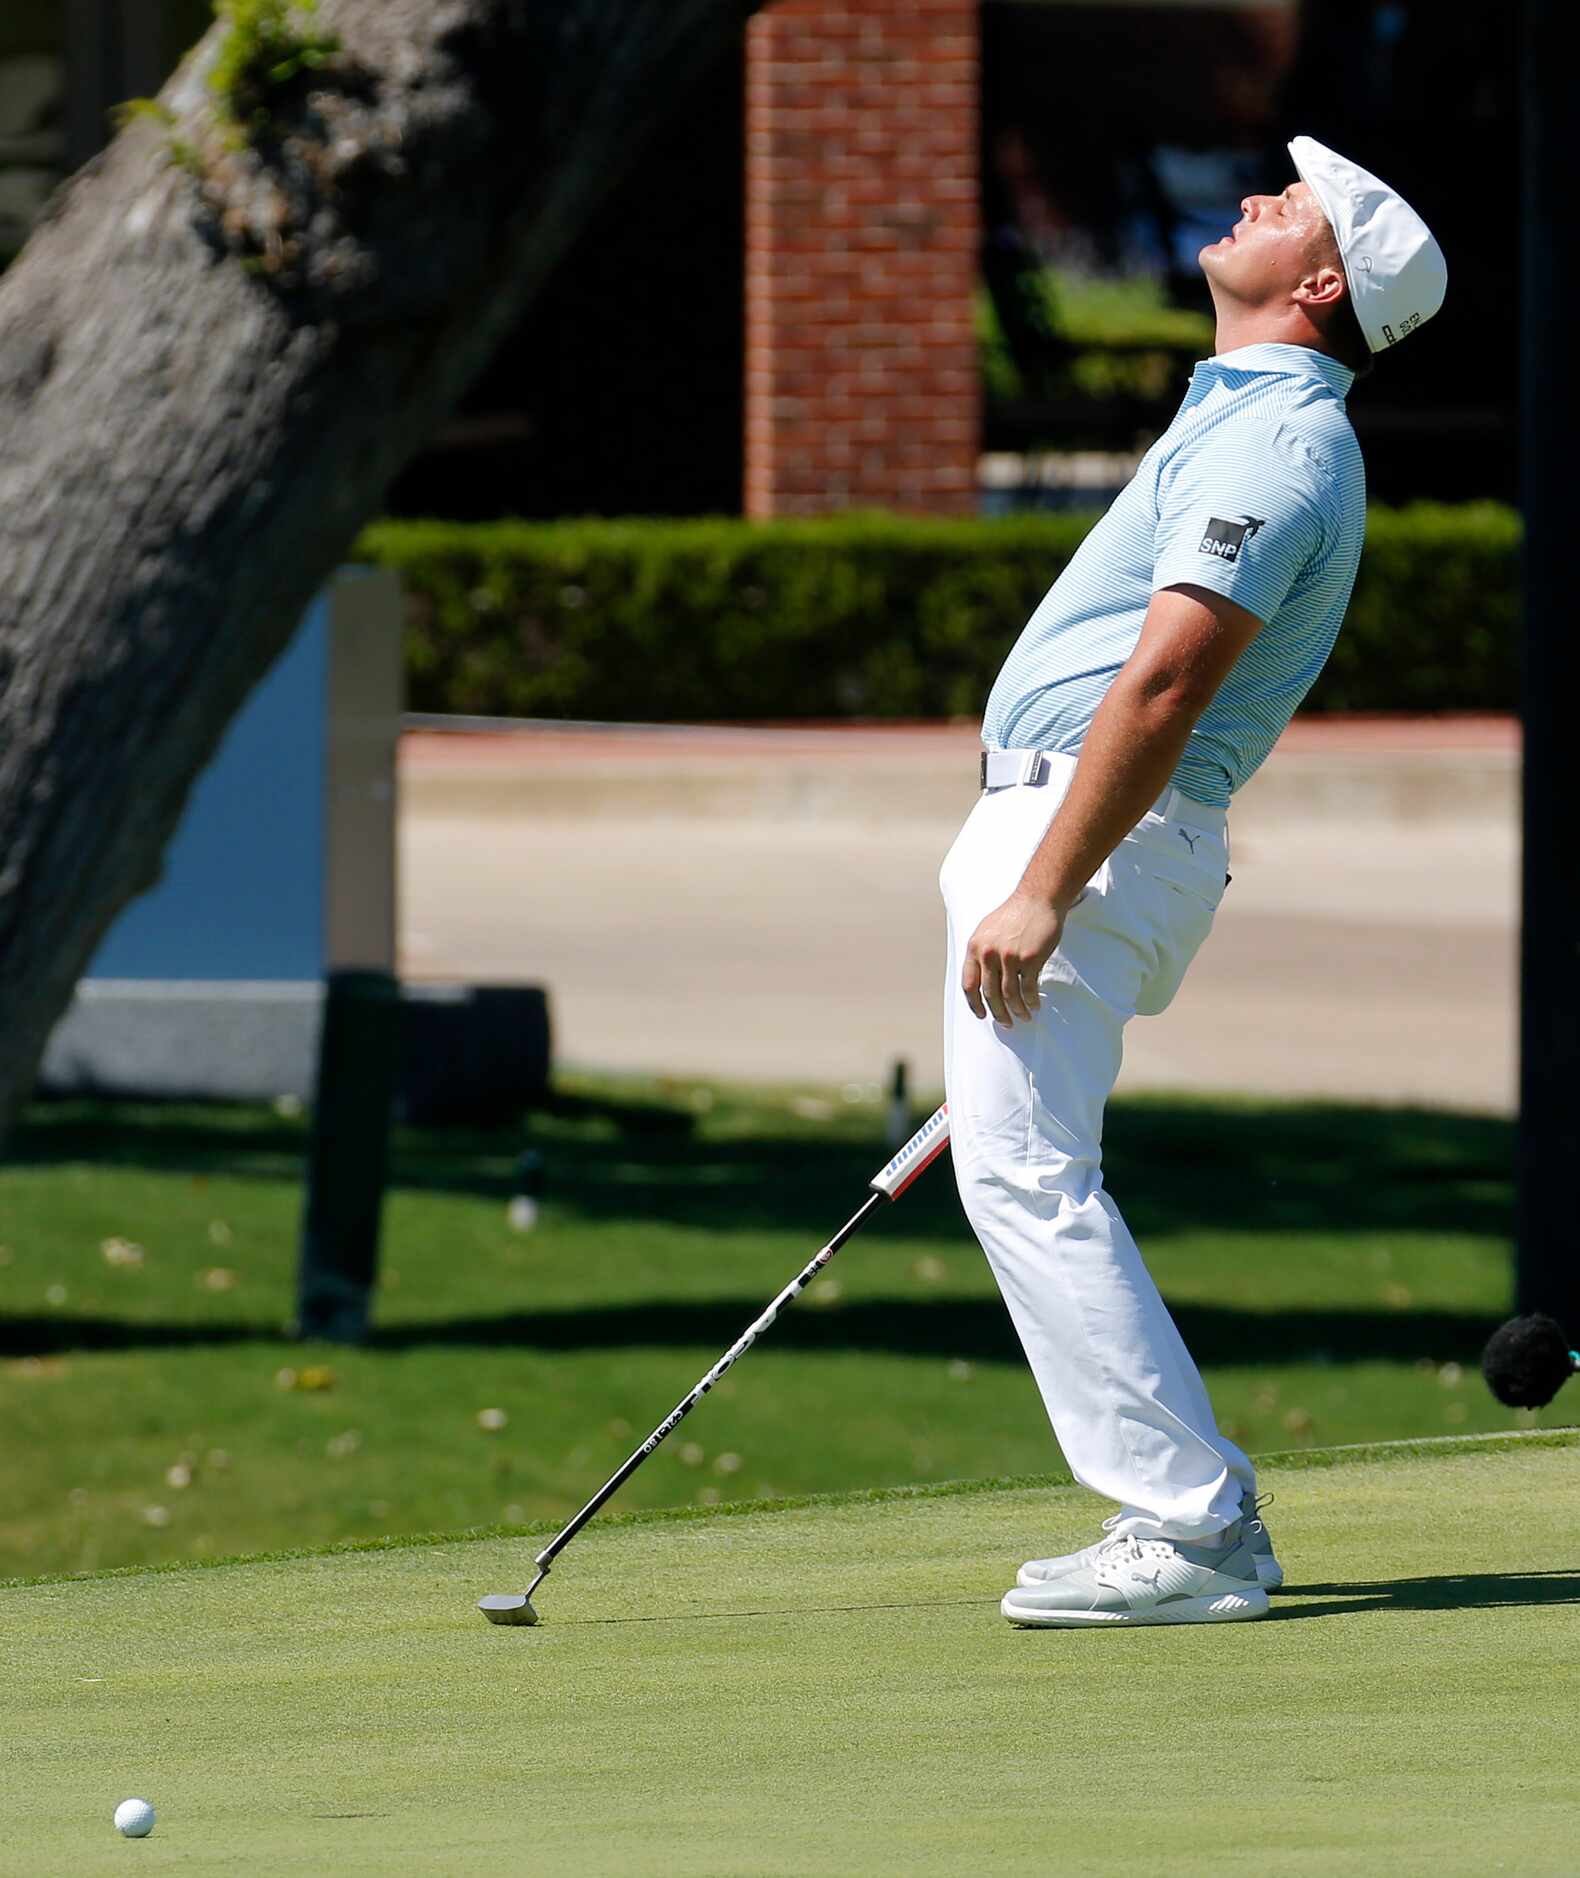 PGA Tour golfer Bryson DeChambeau
reacts after missing a birdie putt on No. 18 leaving him...